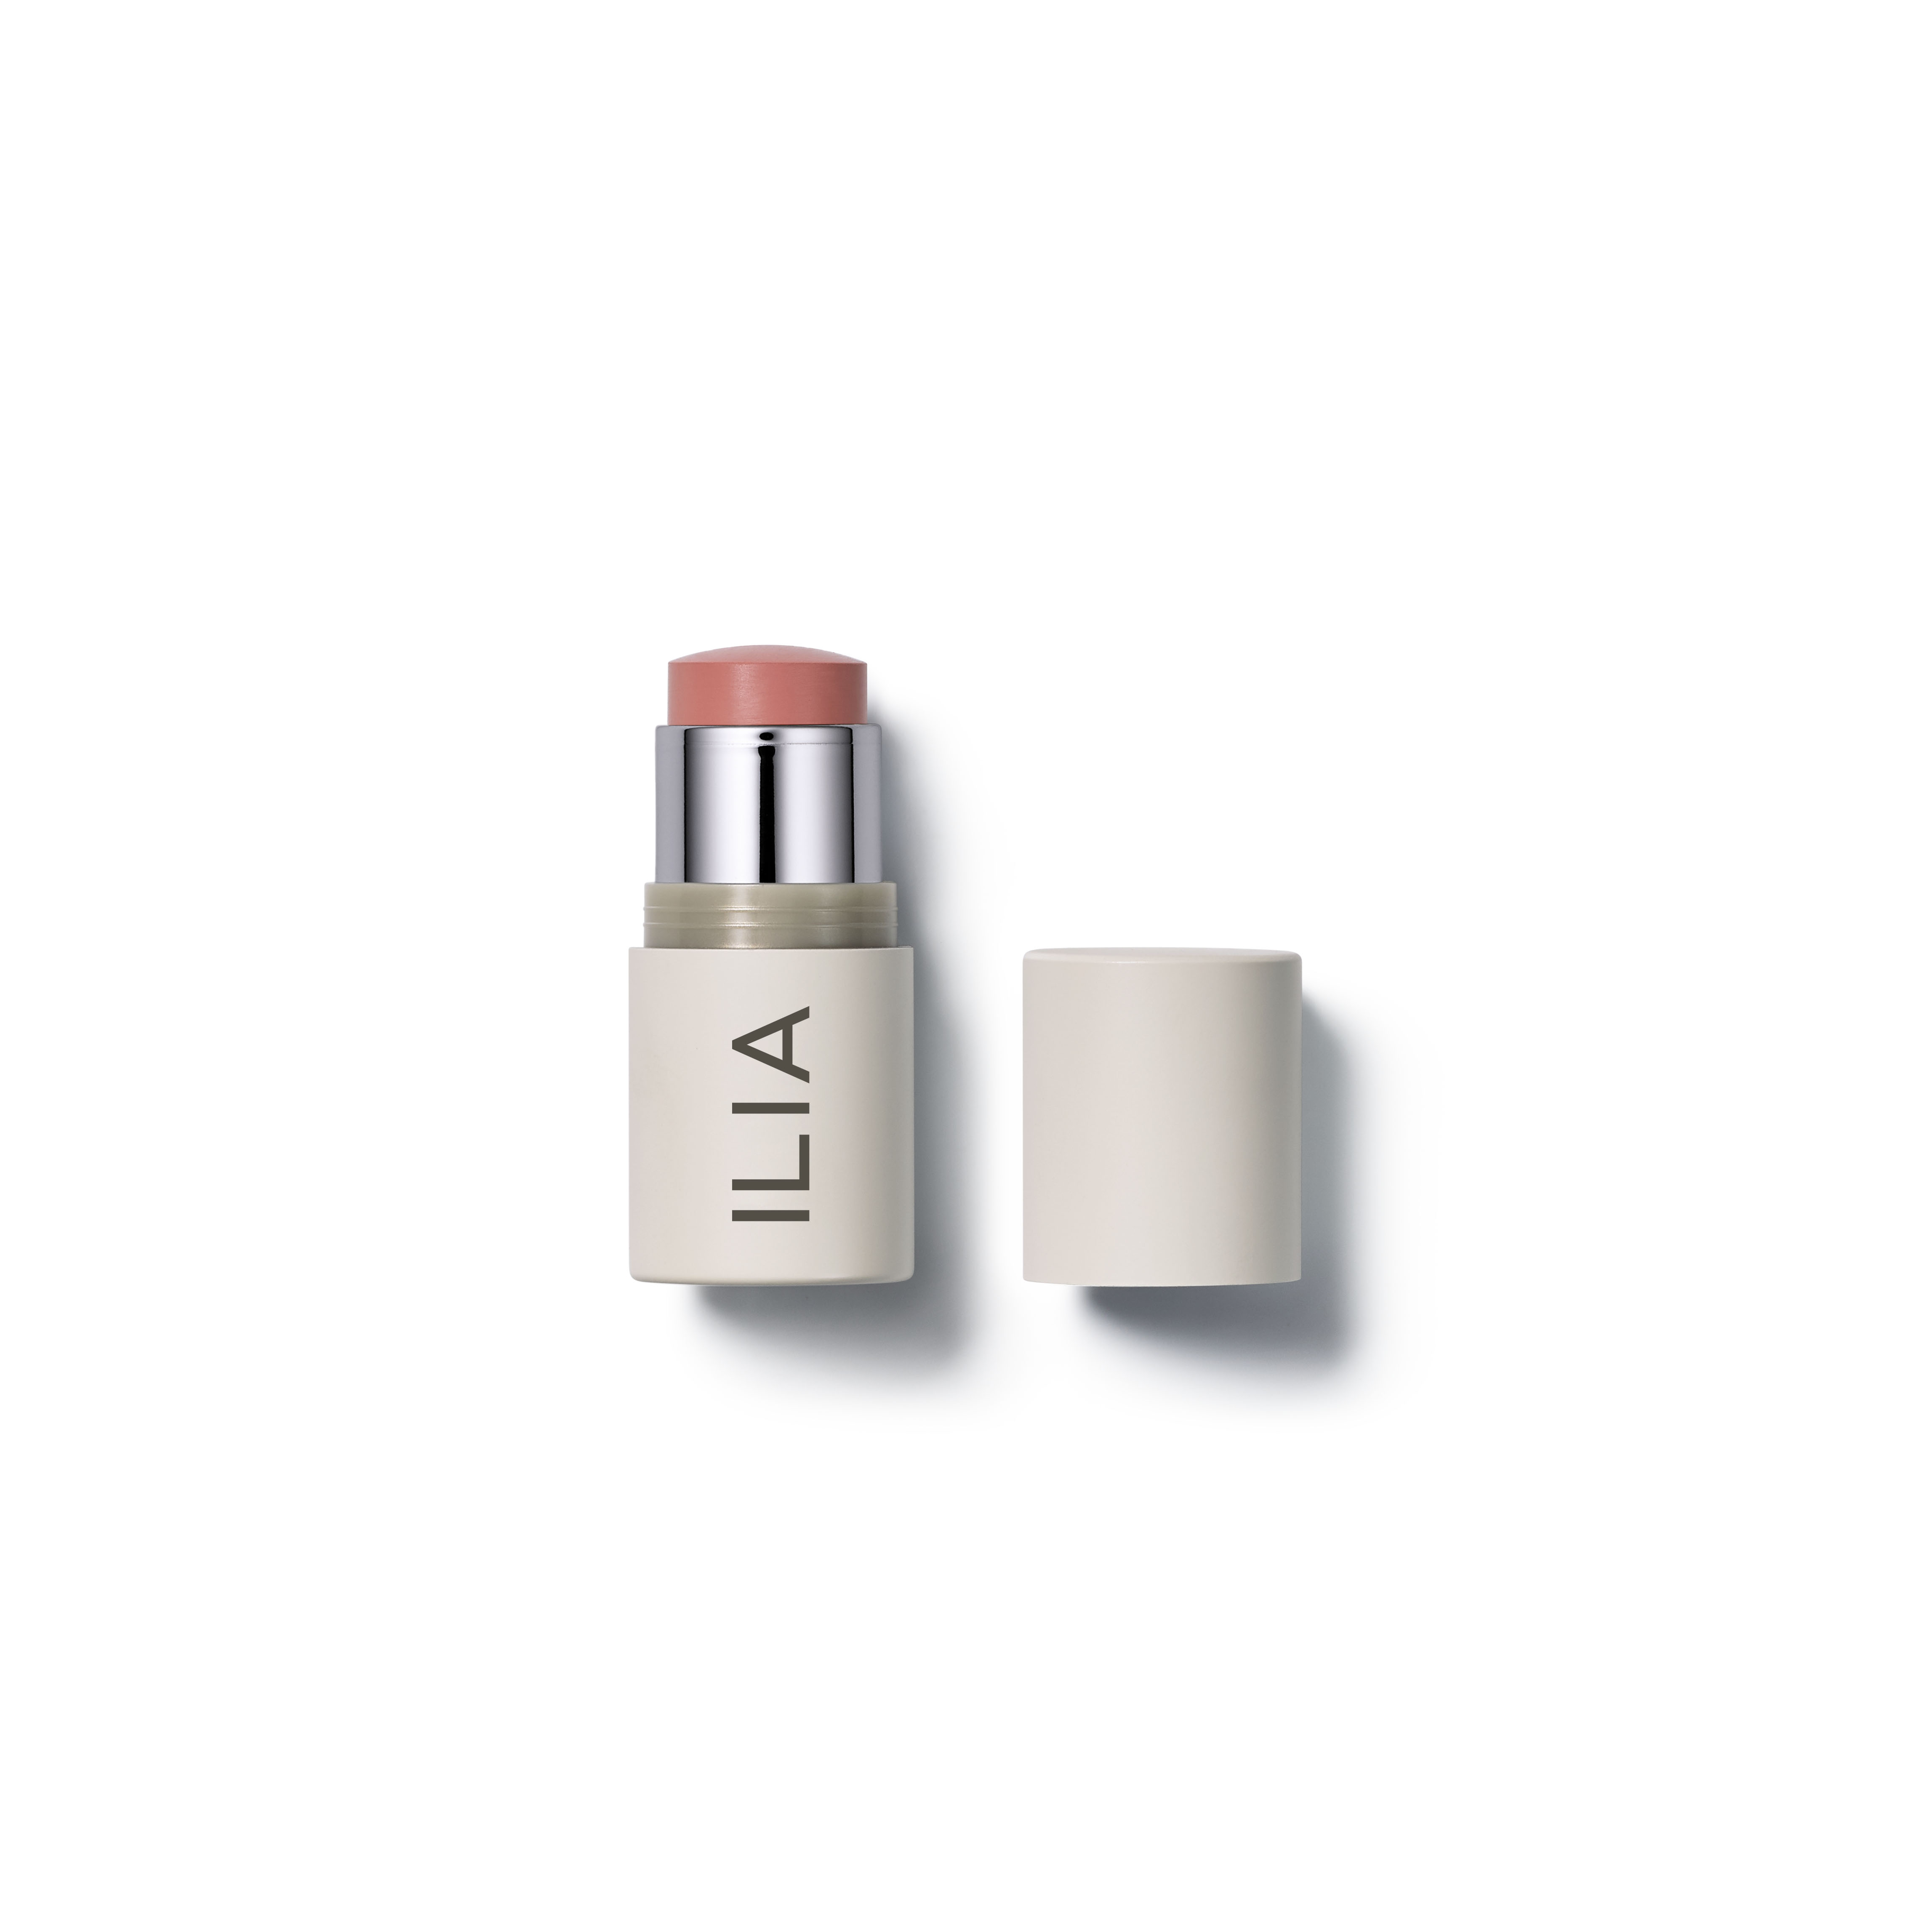 Ilia multi-stick lip and cheek product.